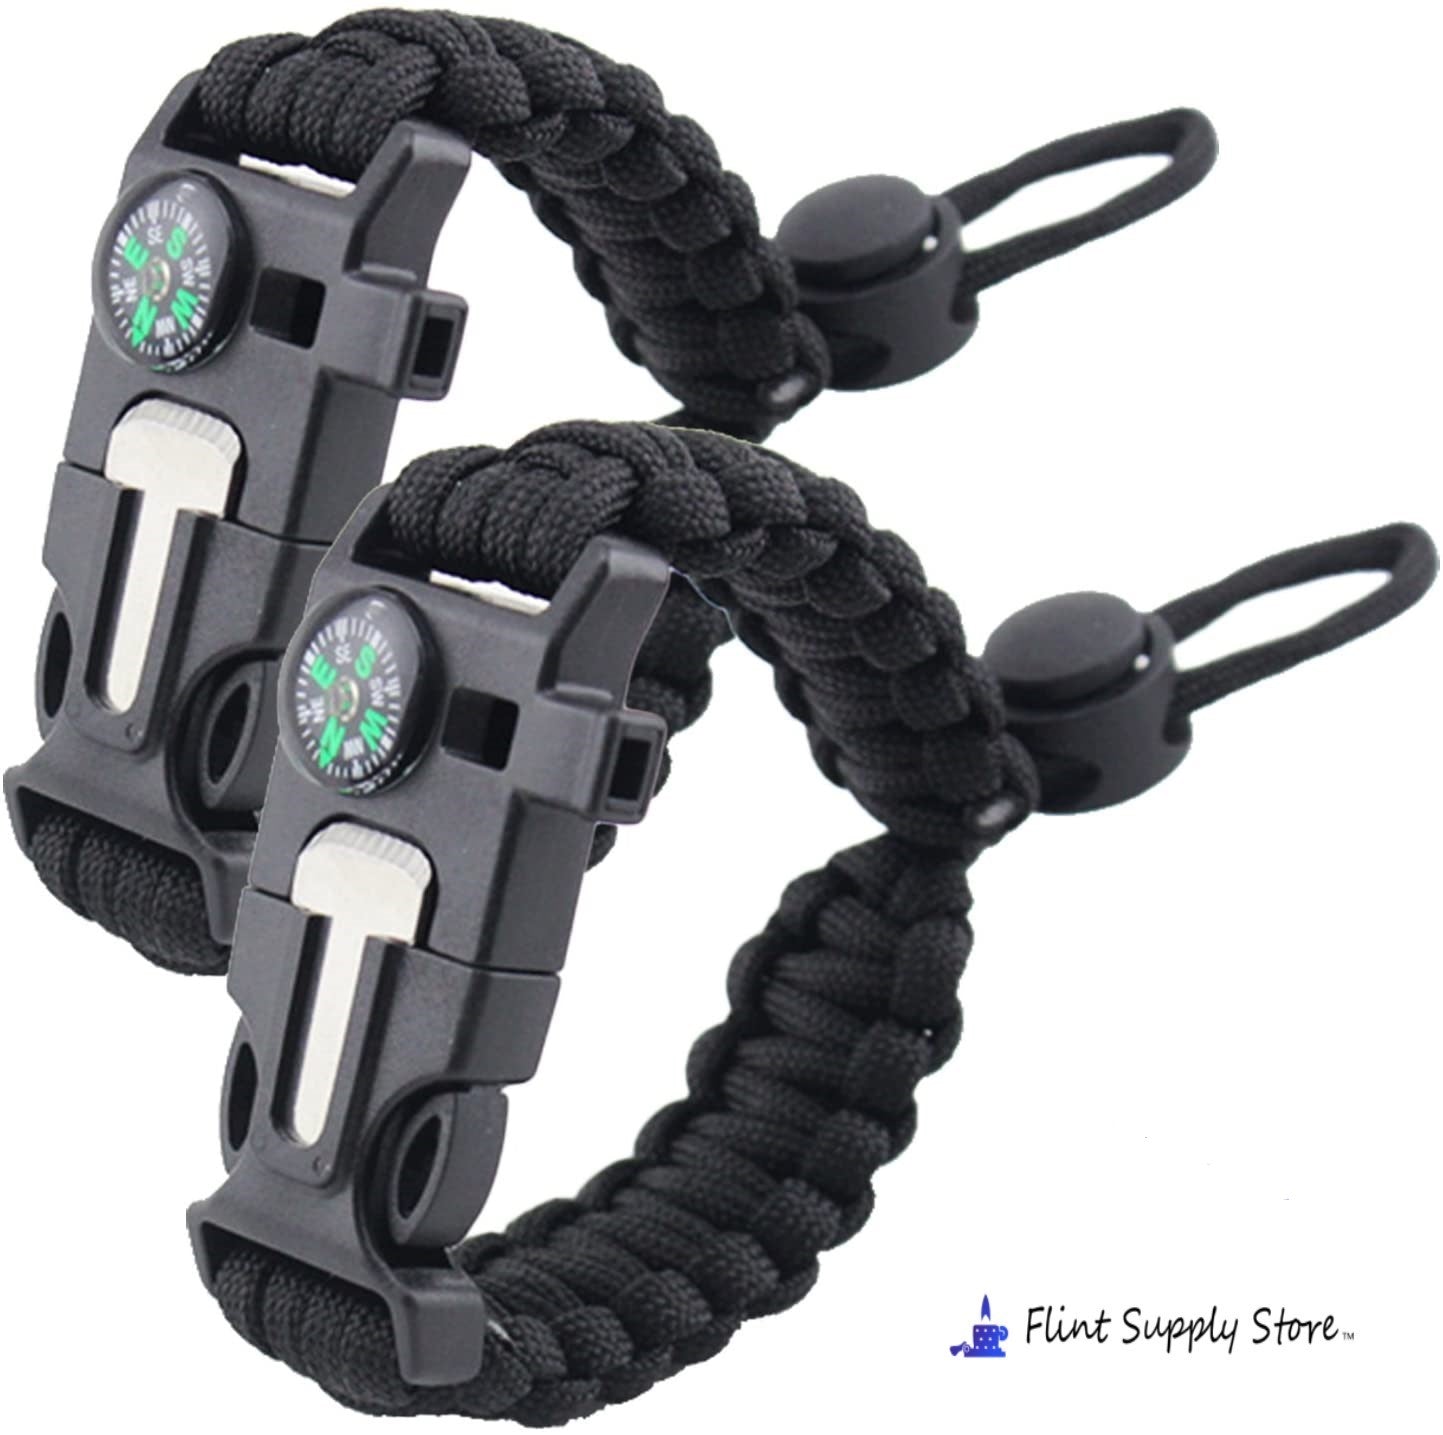 Survival Bracelet 5 in 1 Paracord - Black by